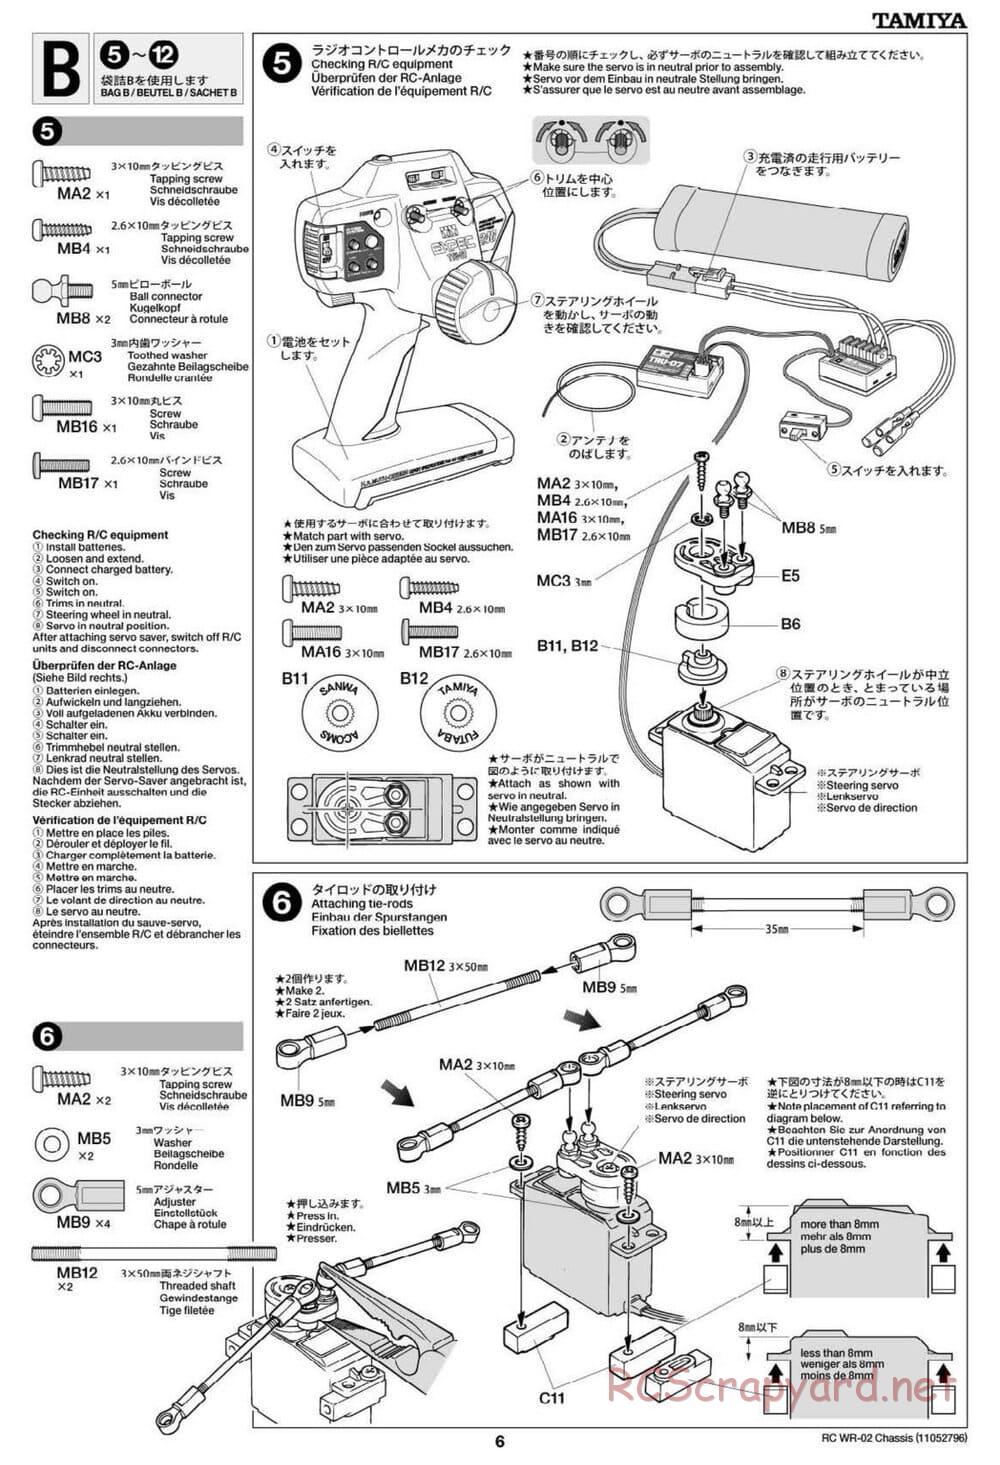 Tamiya - WR-02 Chassis - Manual - Page 6